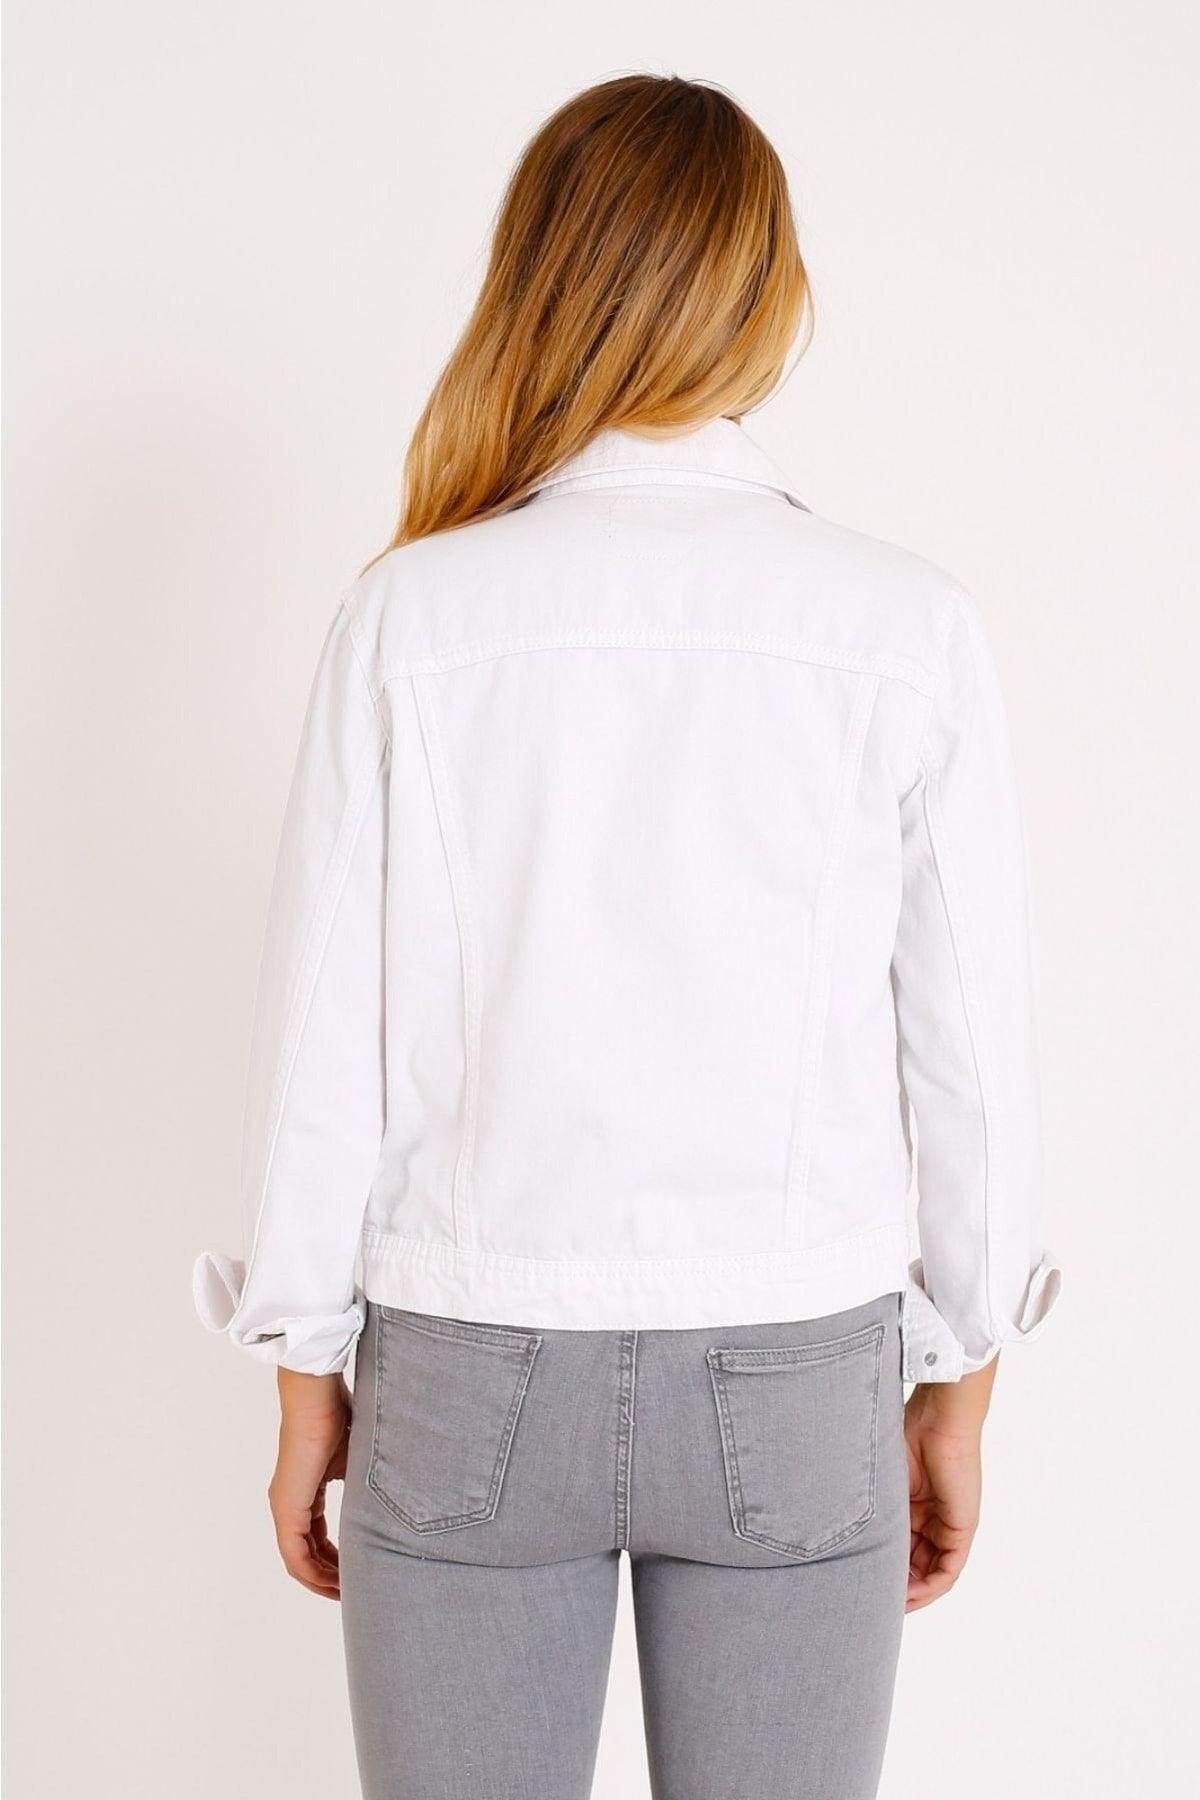 Classic Collar Standard Sleeve Pocket Unlined Short Jeans Women's Jacket Cotton All Seasons - Swordslife